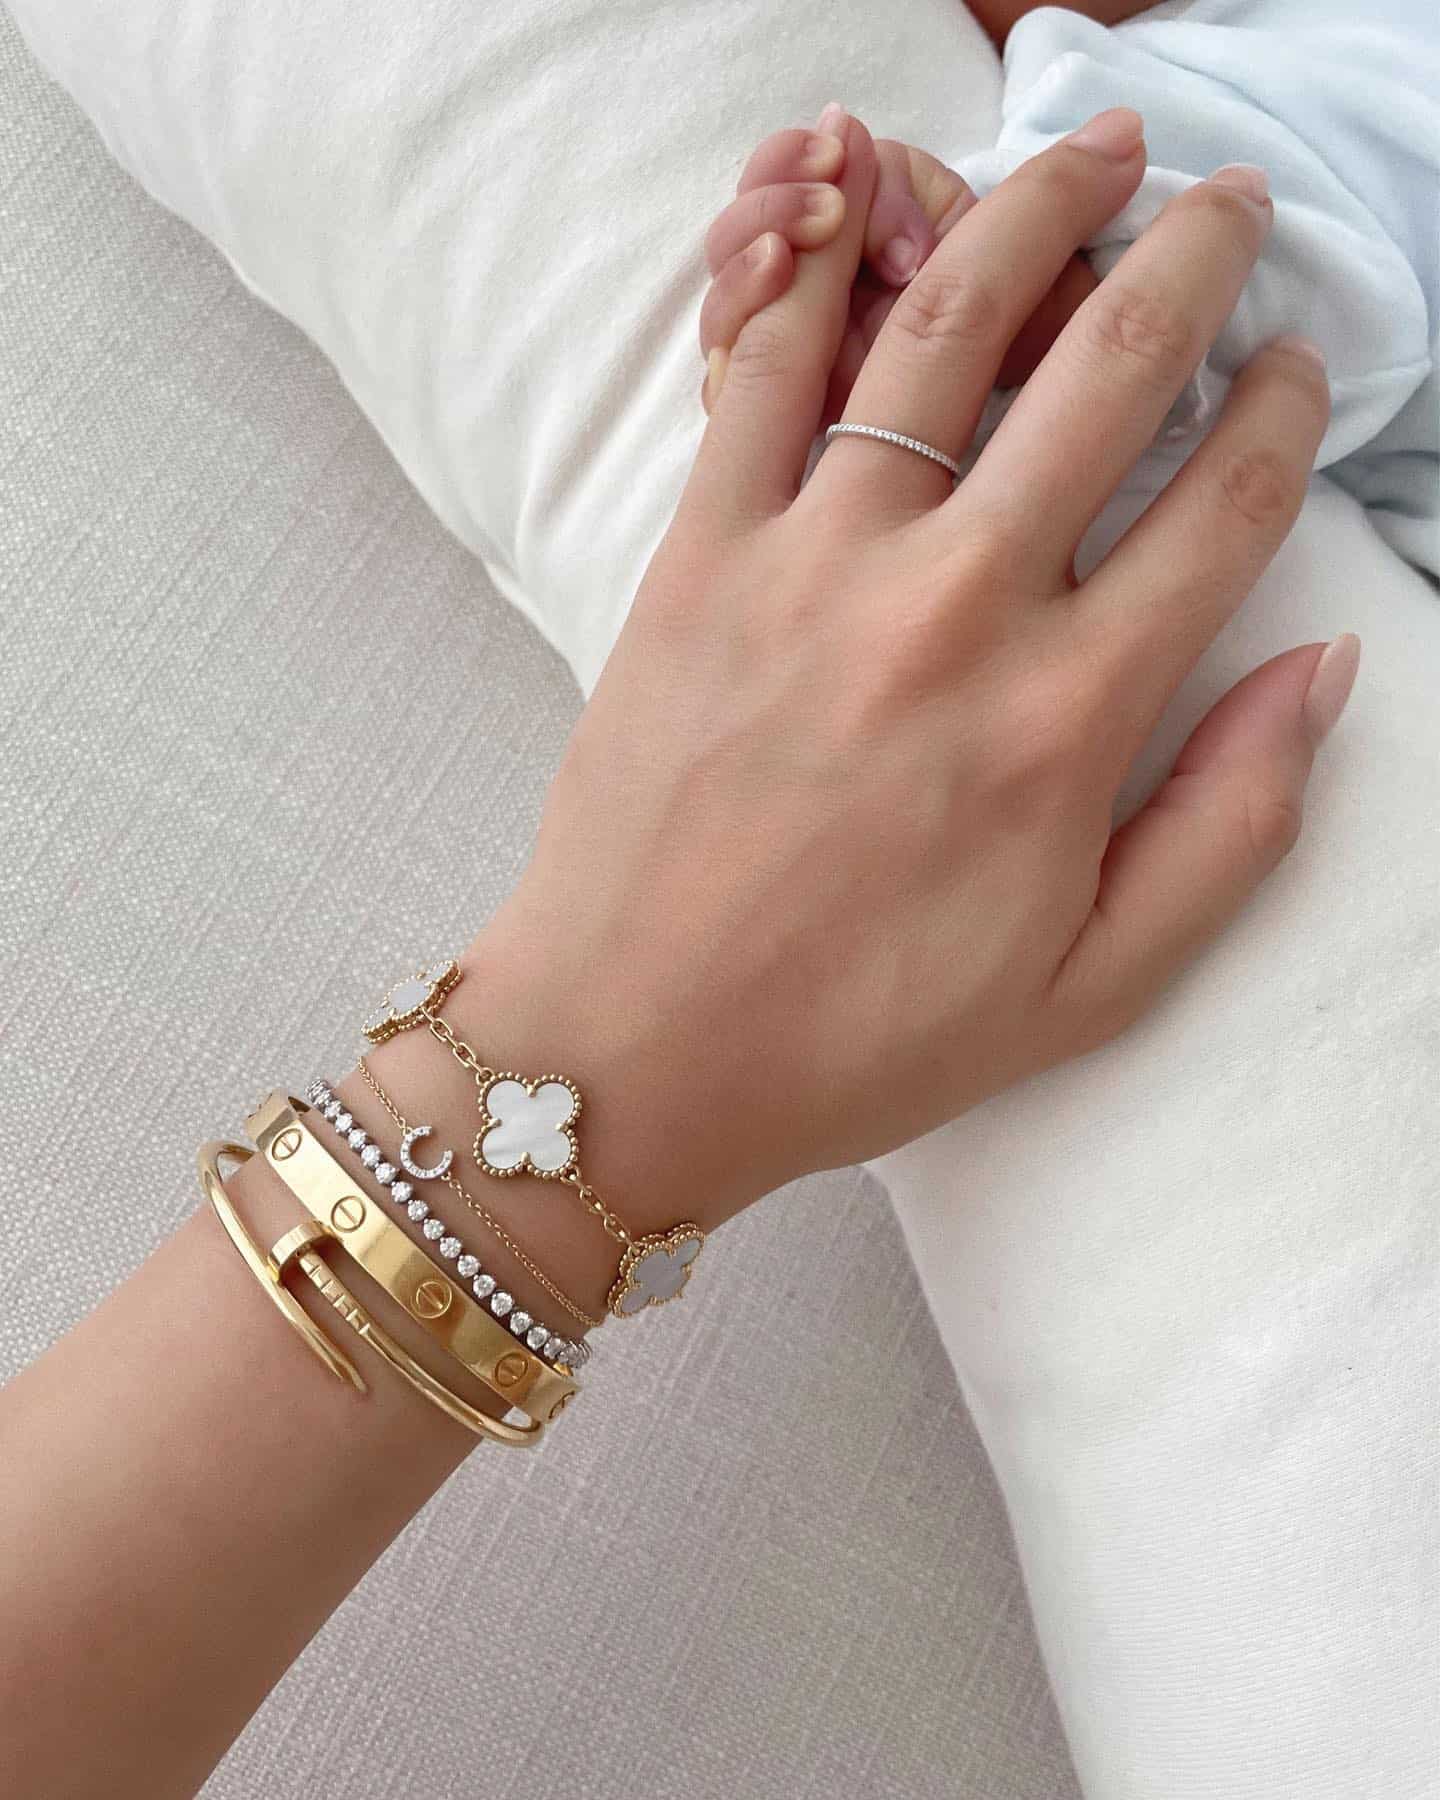 is the Cartier love bracelet a good push present